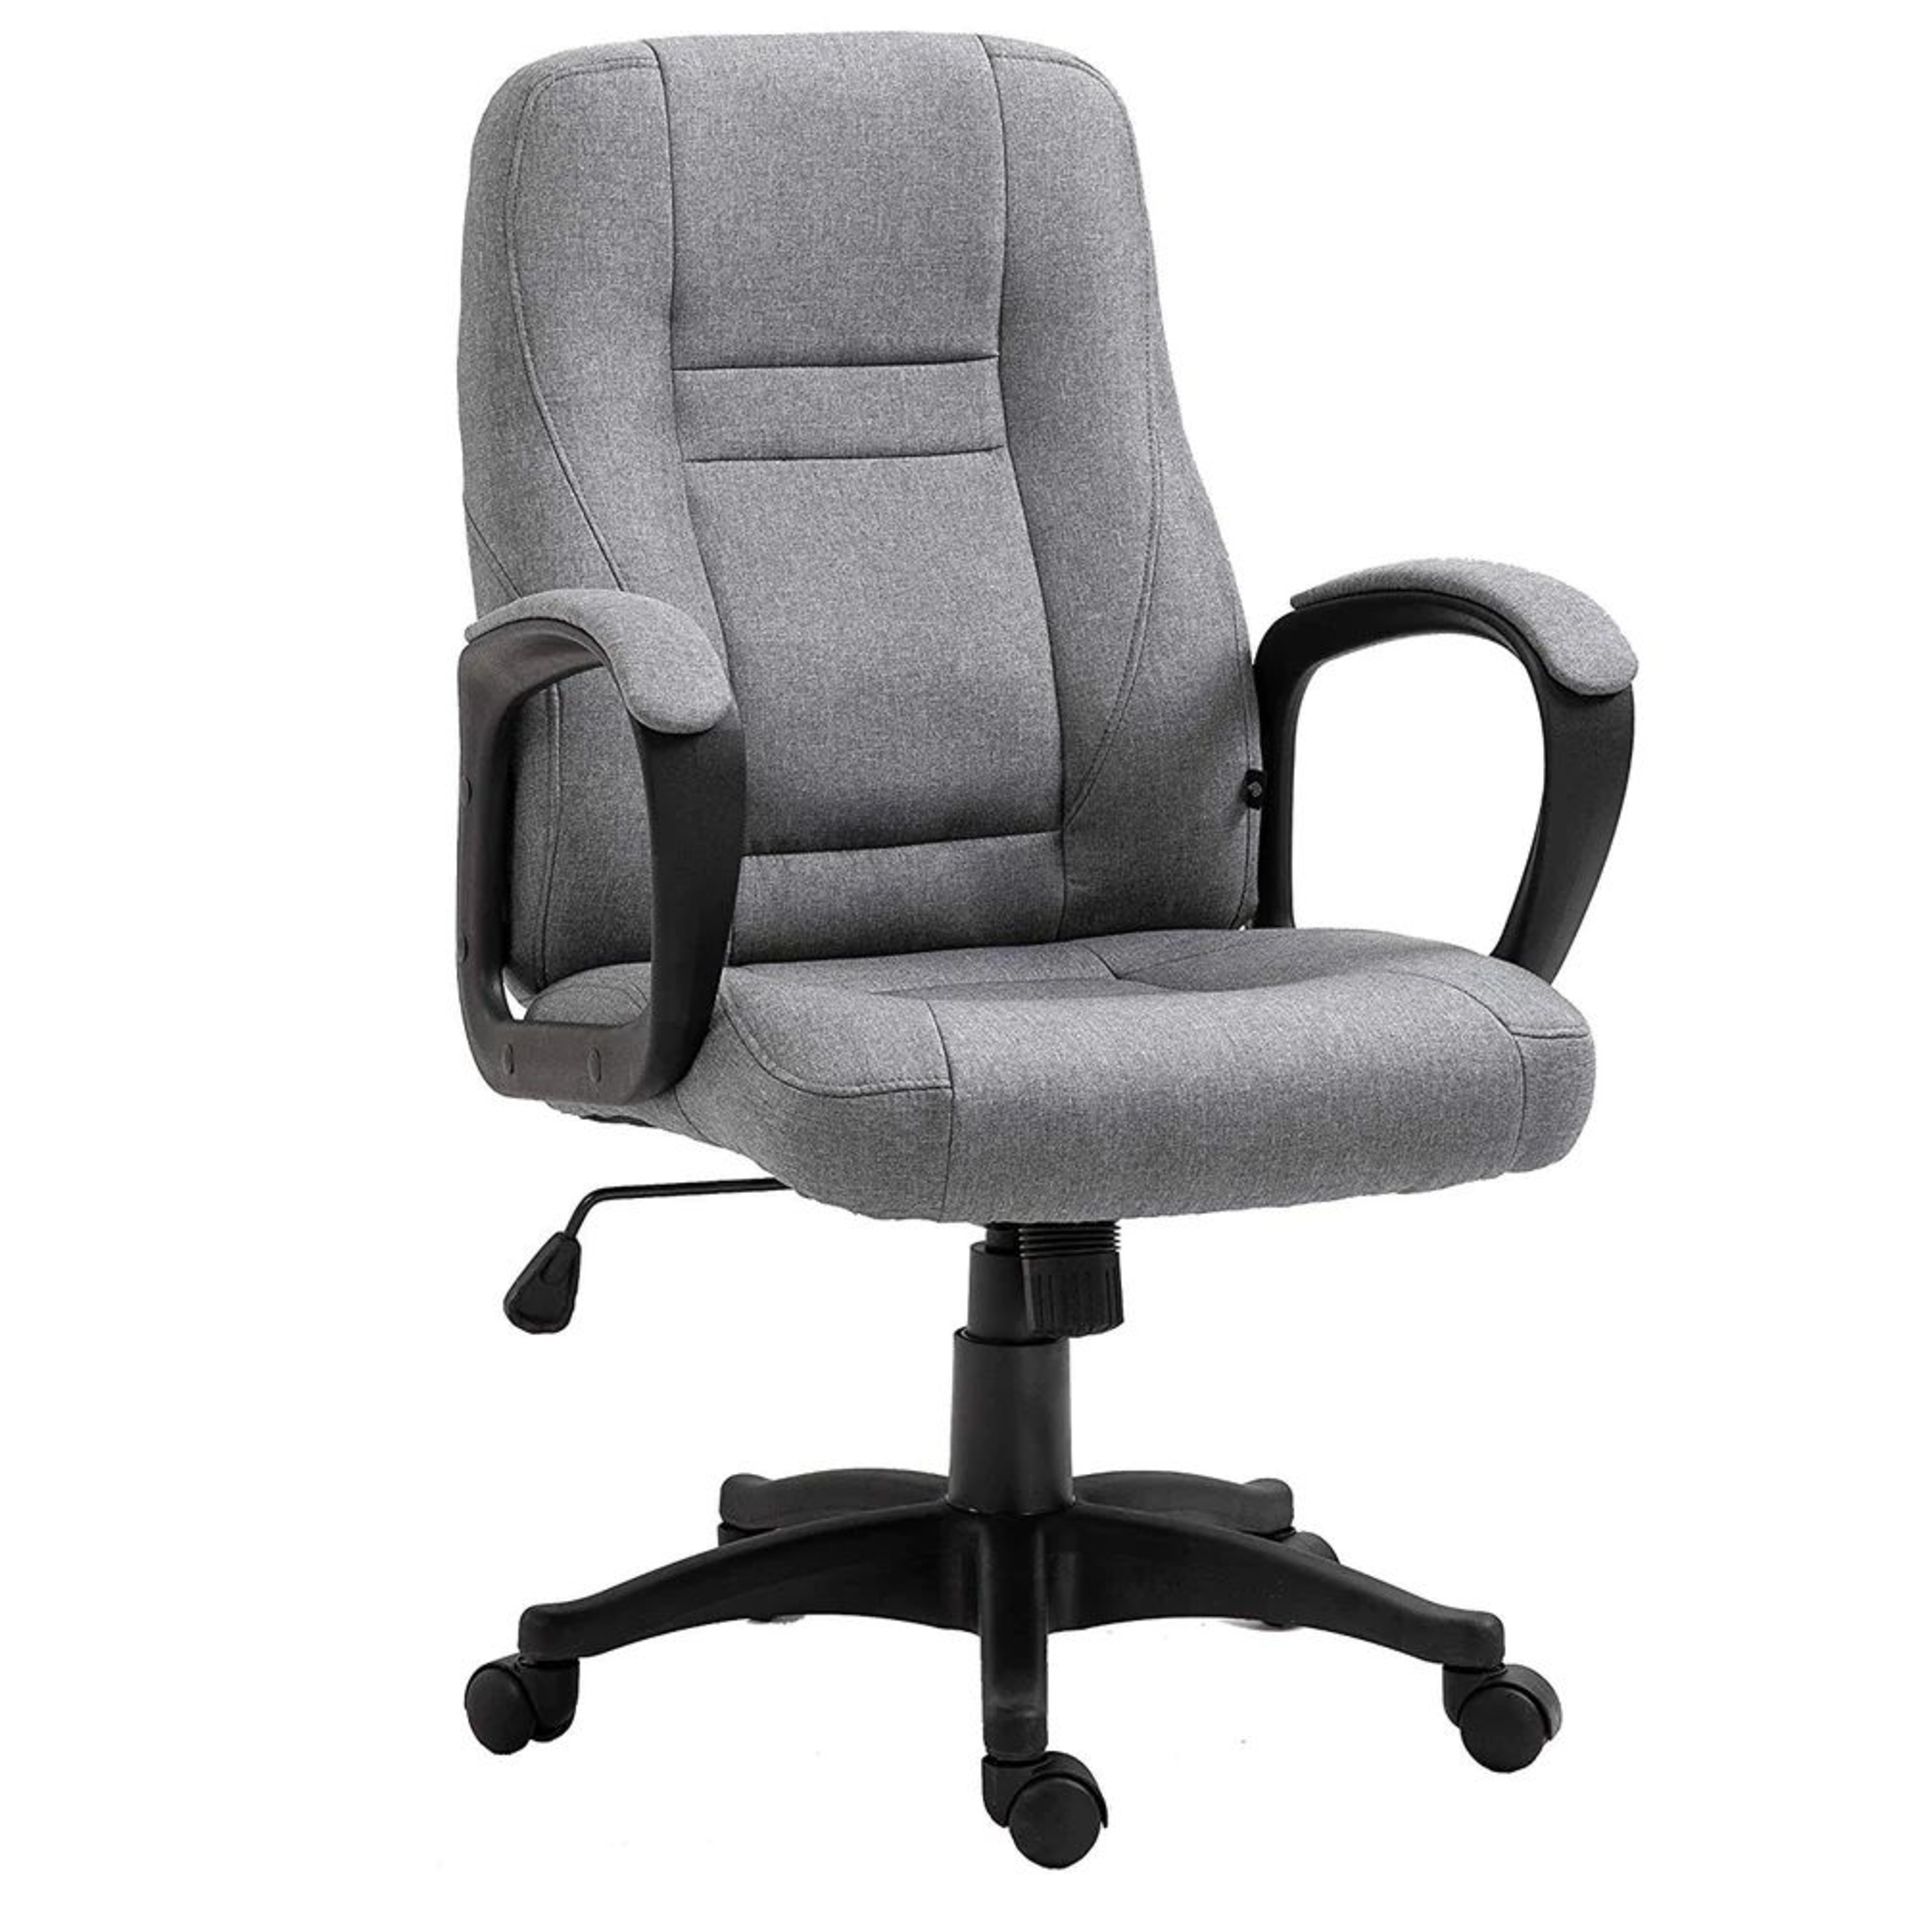 Swivel Office Desk Chair MO19 Grey Fabric. -ER30. RRP £119.99.